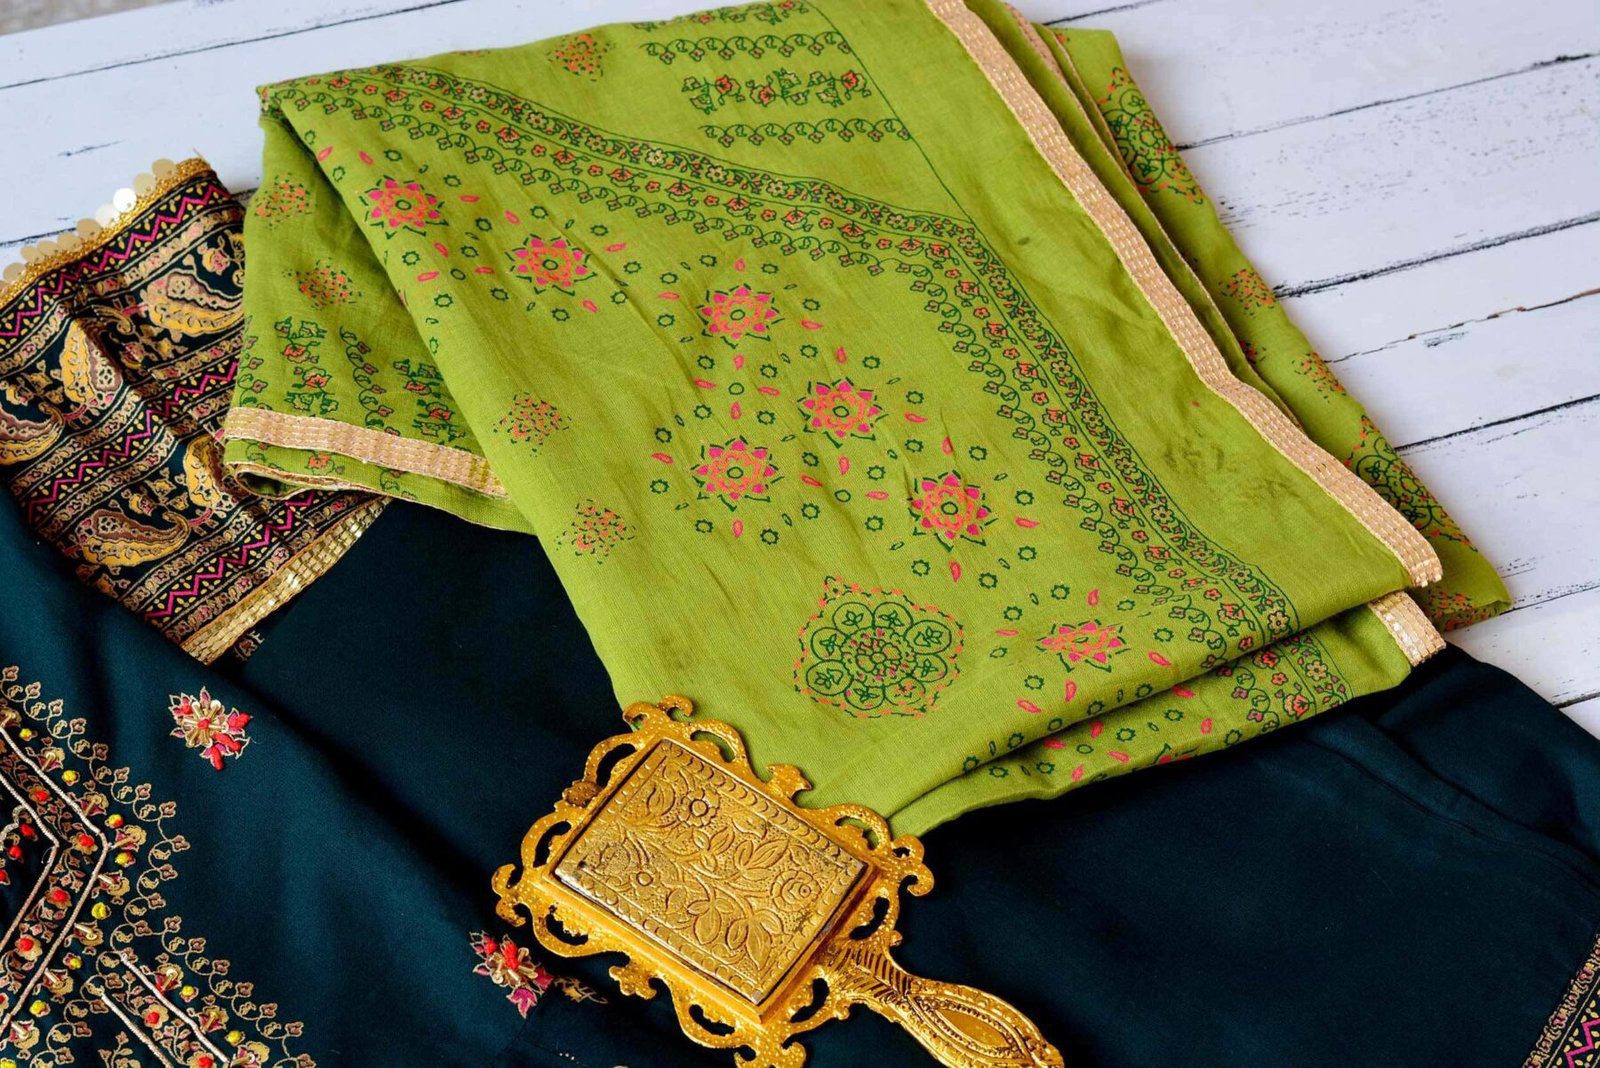 Ravishing Embroidered Anarkali Outfit